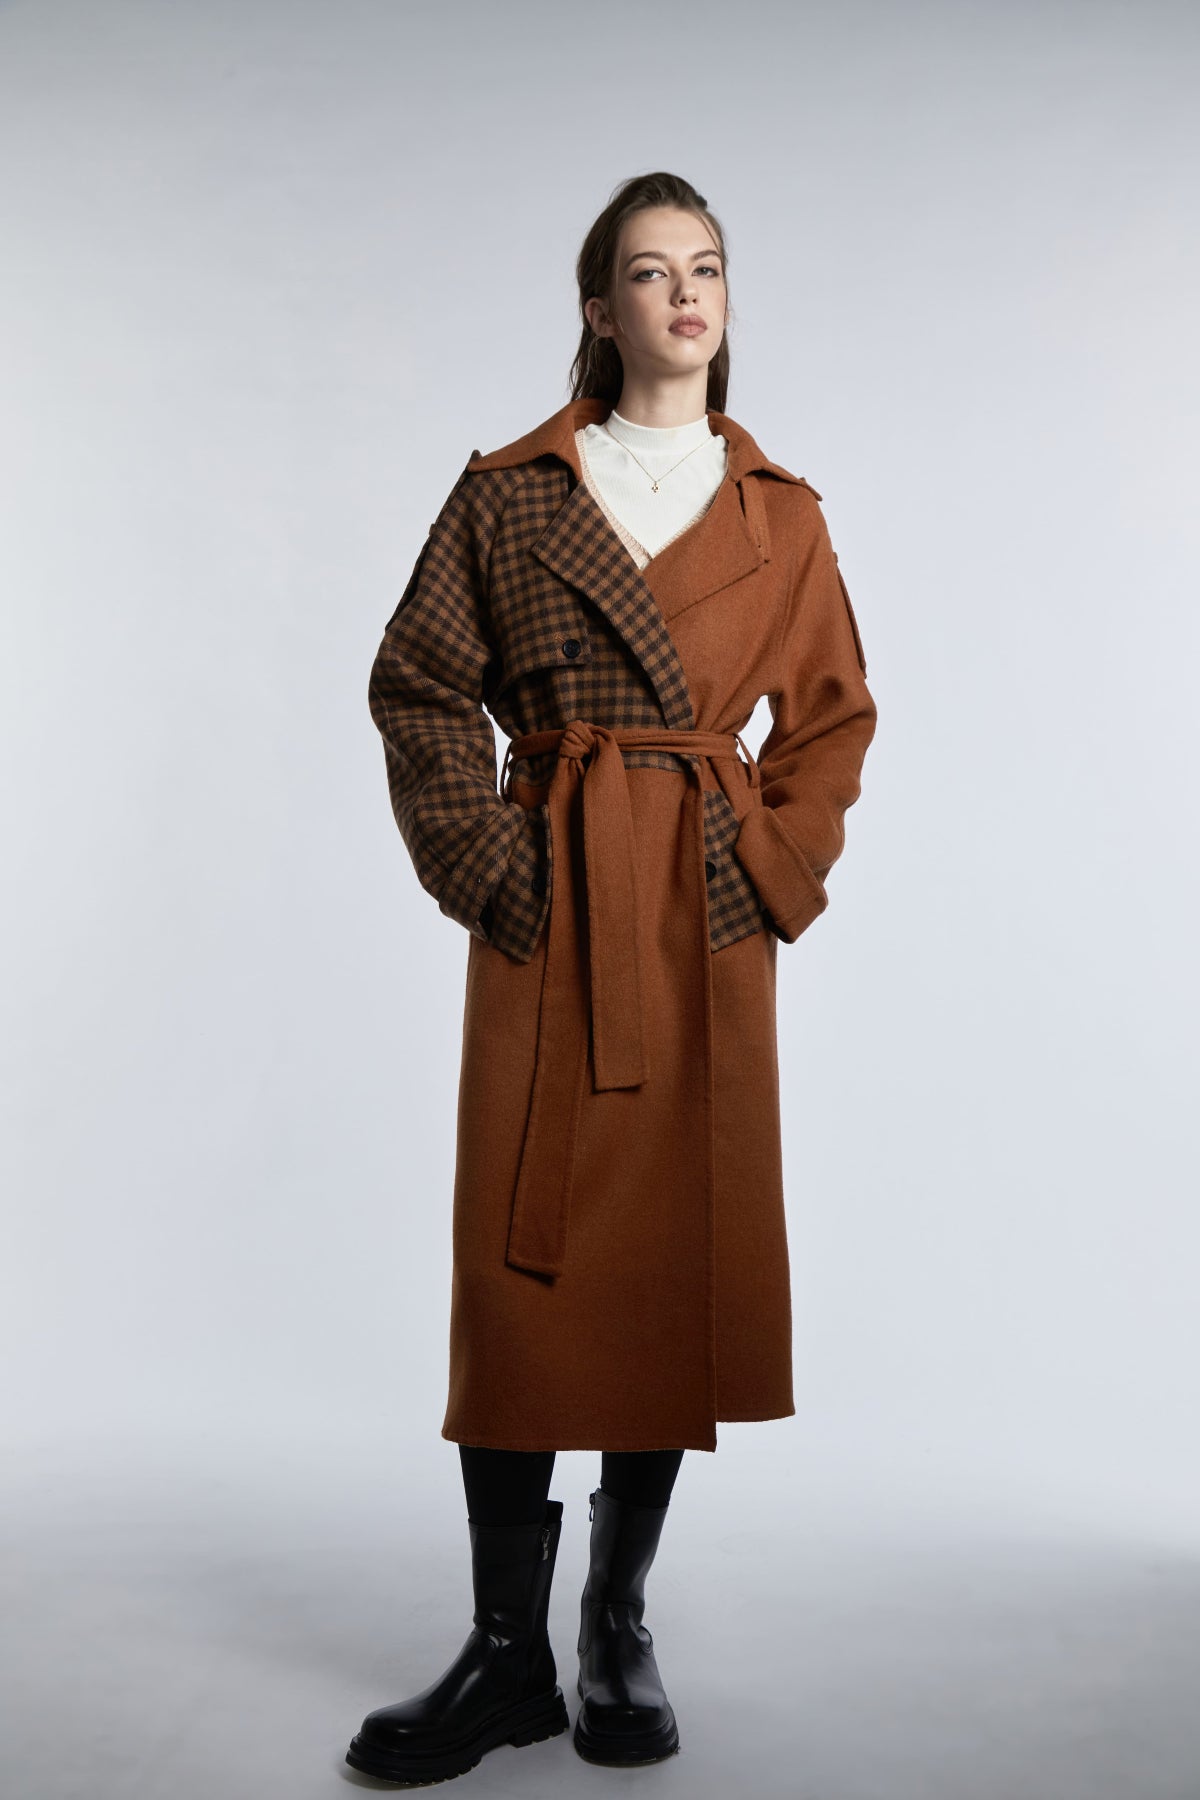 Caramel Brown Wool Coat with Black Plaid Trim - By Quaint